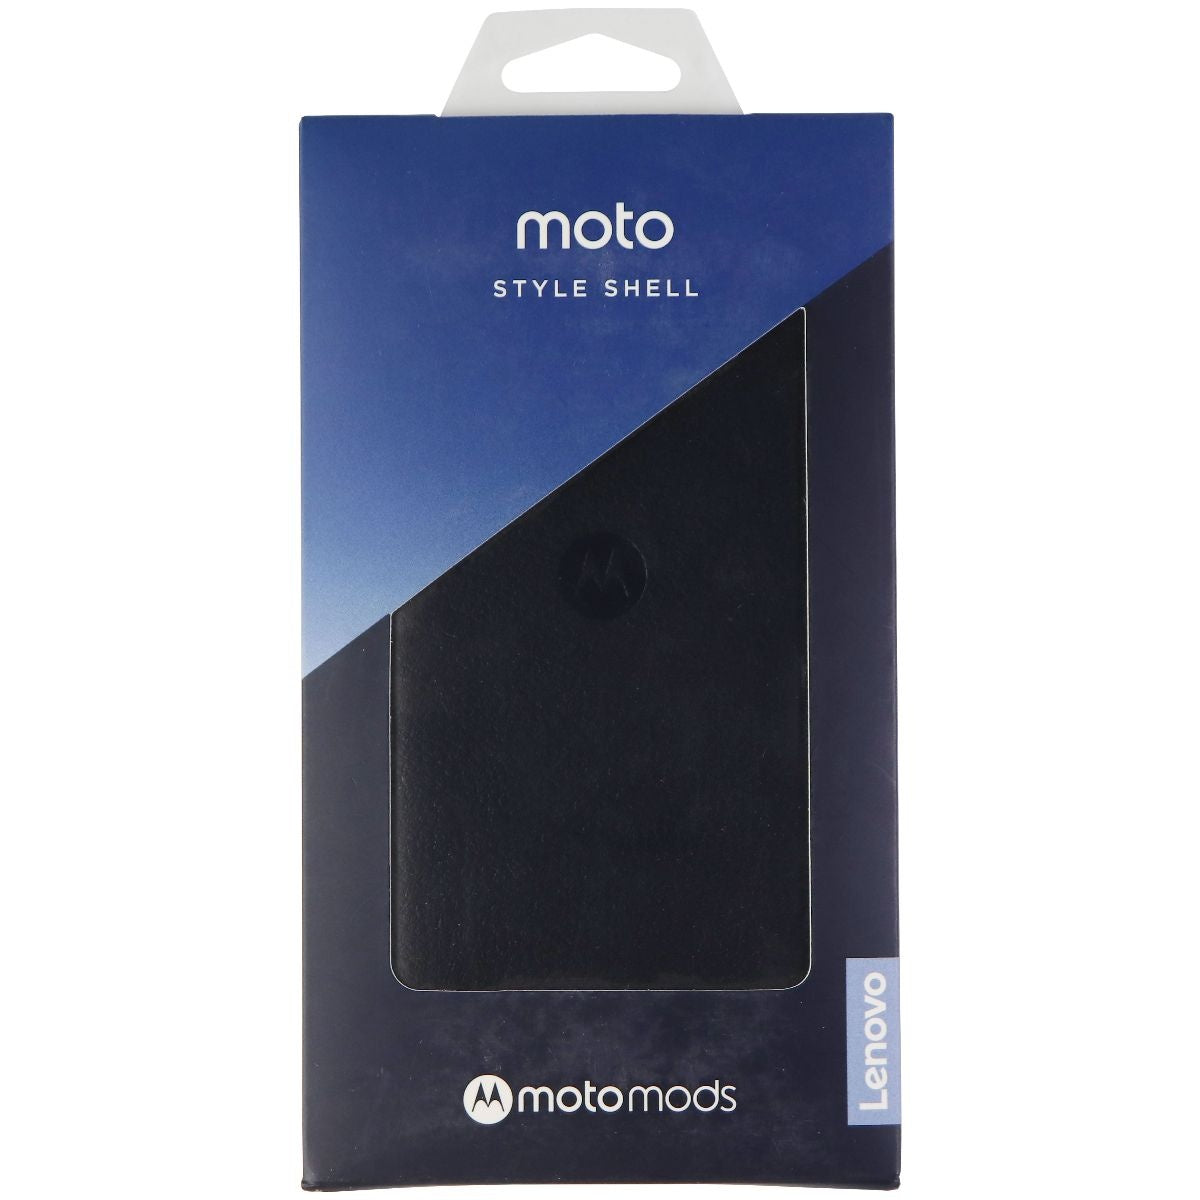 Motorola 360 Camera Motomods White MD100S